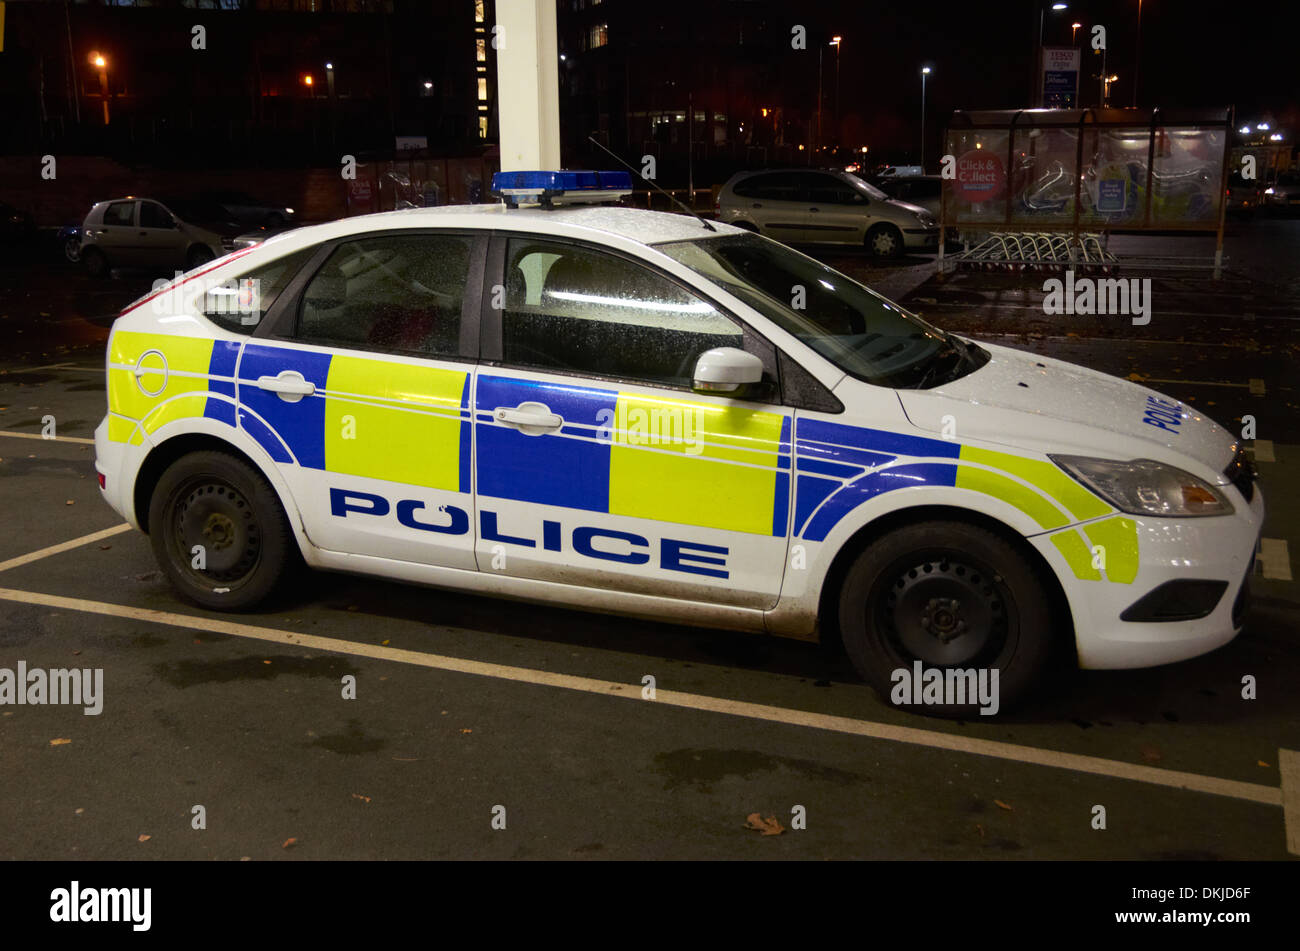 Police car in a supermarket car park. Stock Photo